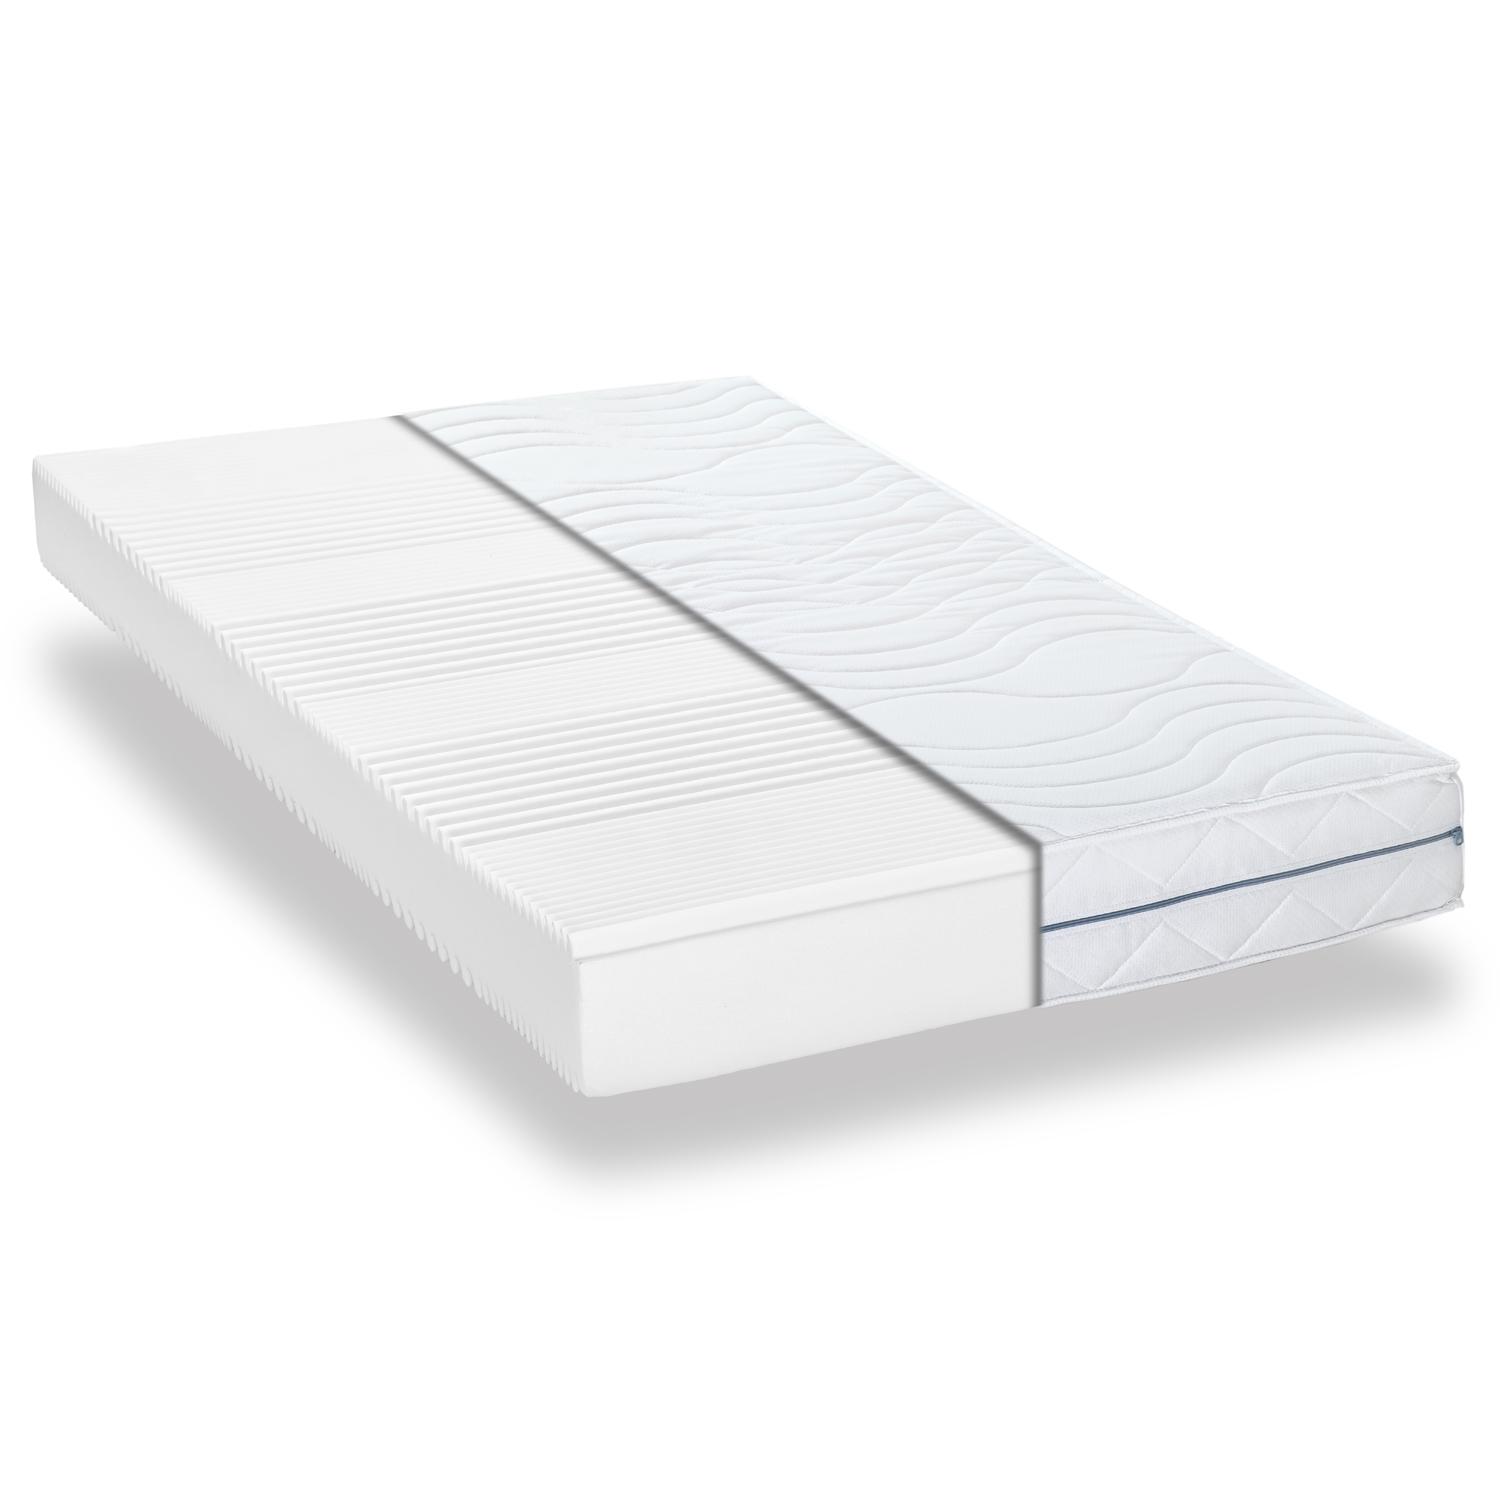 Orthopaedic mattress 140x200 cm 7-zone Supportho Premium, height 18 cm, firmness level H2/H3